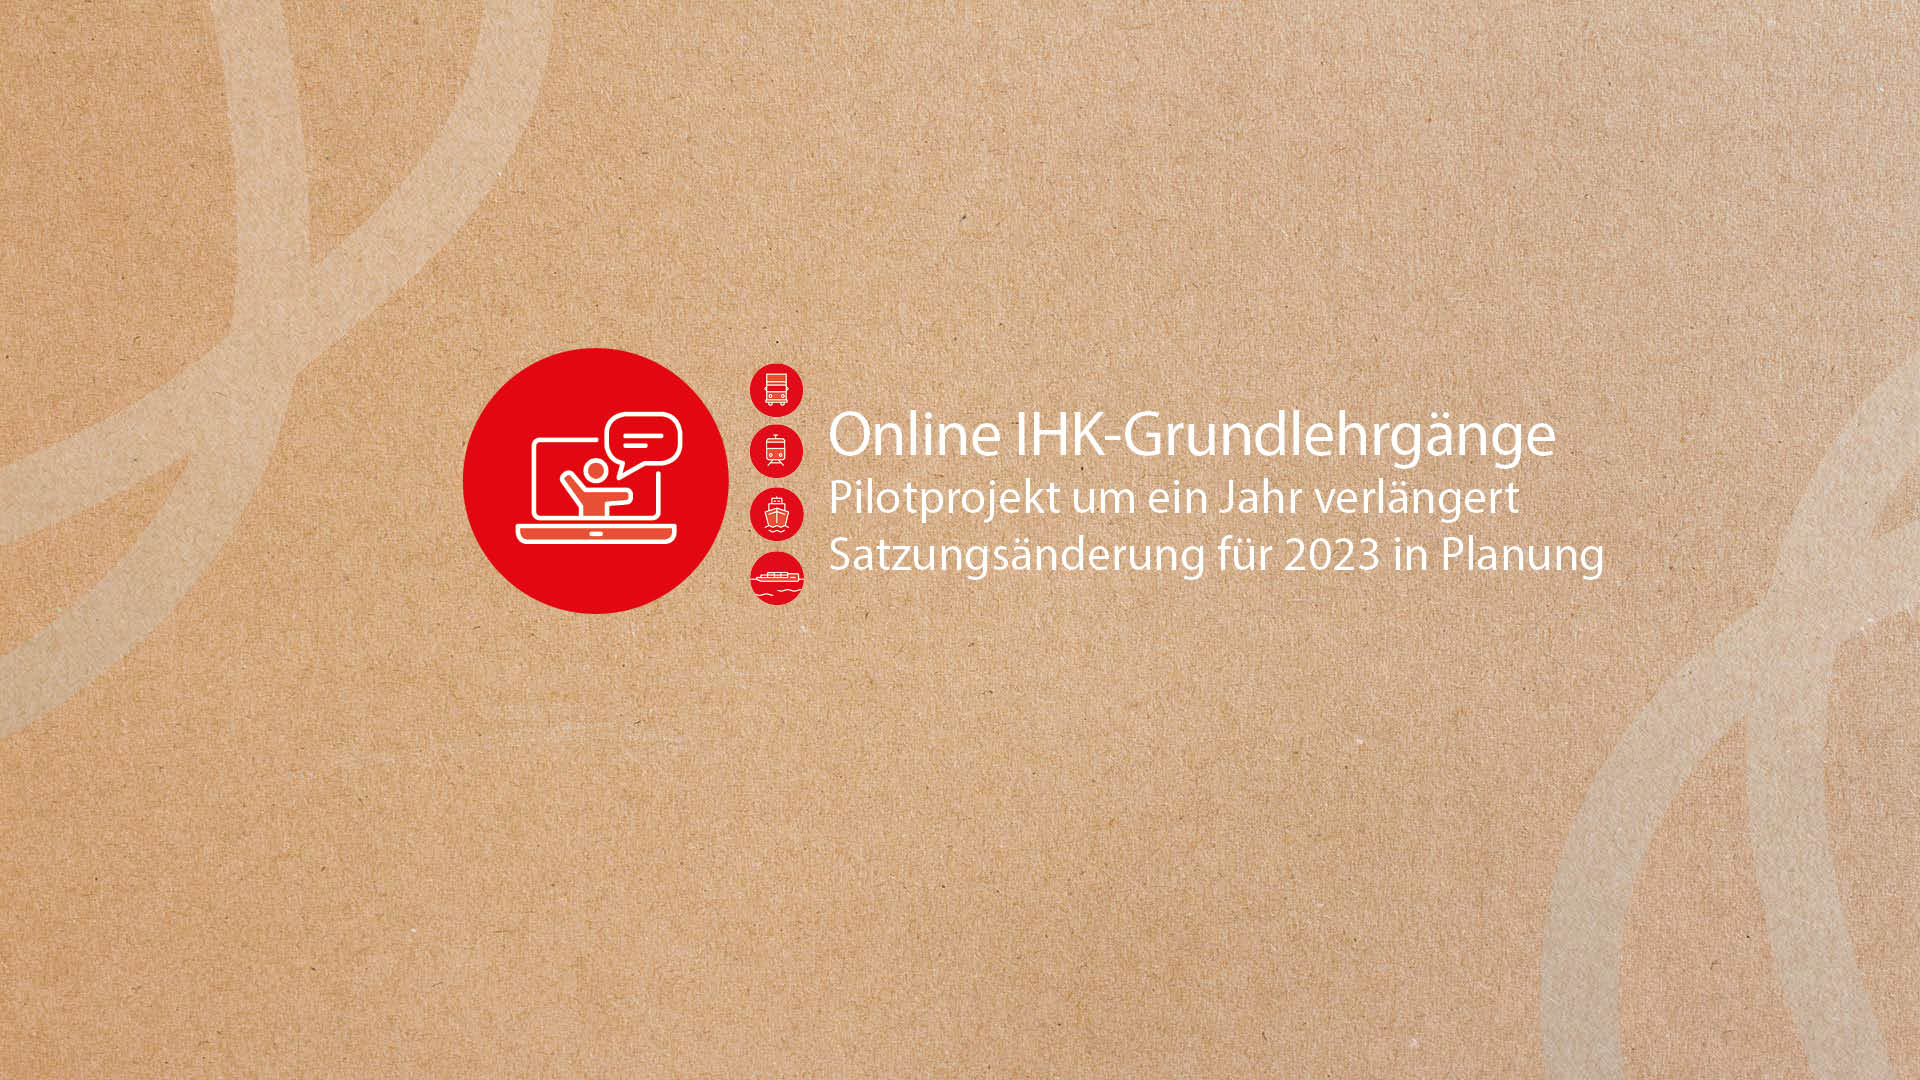 Online IHK-Grundlehrgänge verlängert!